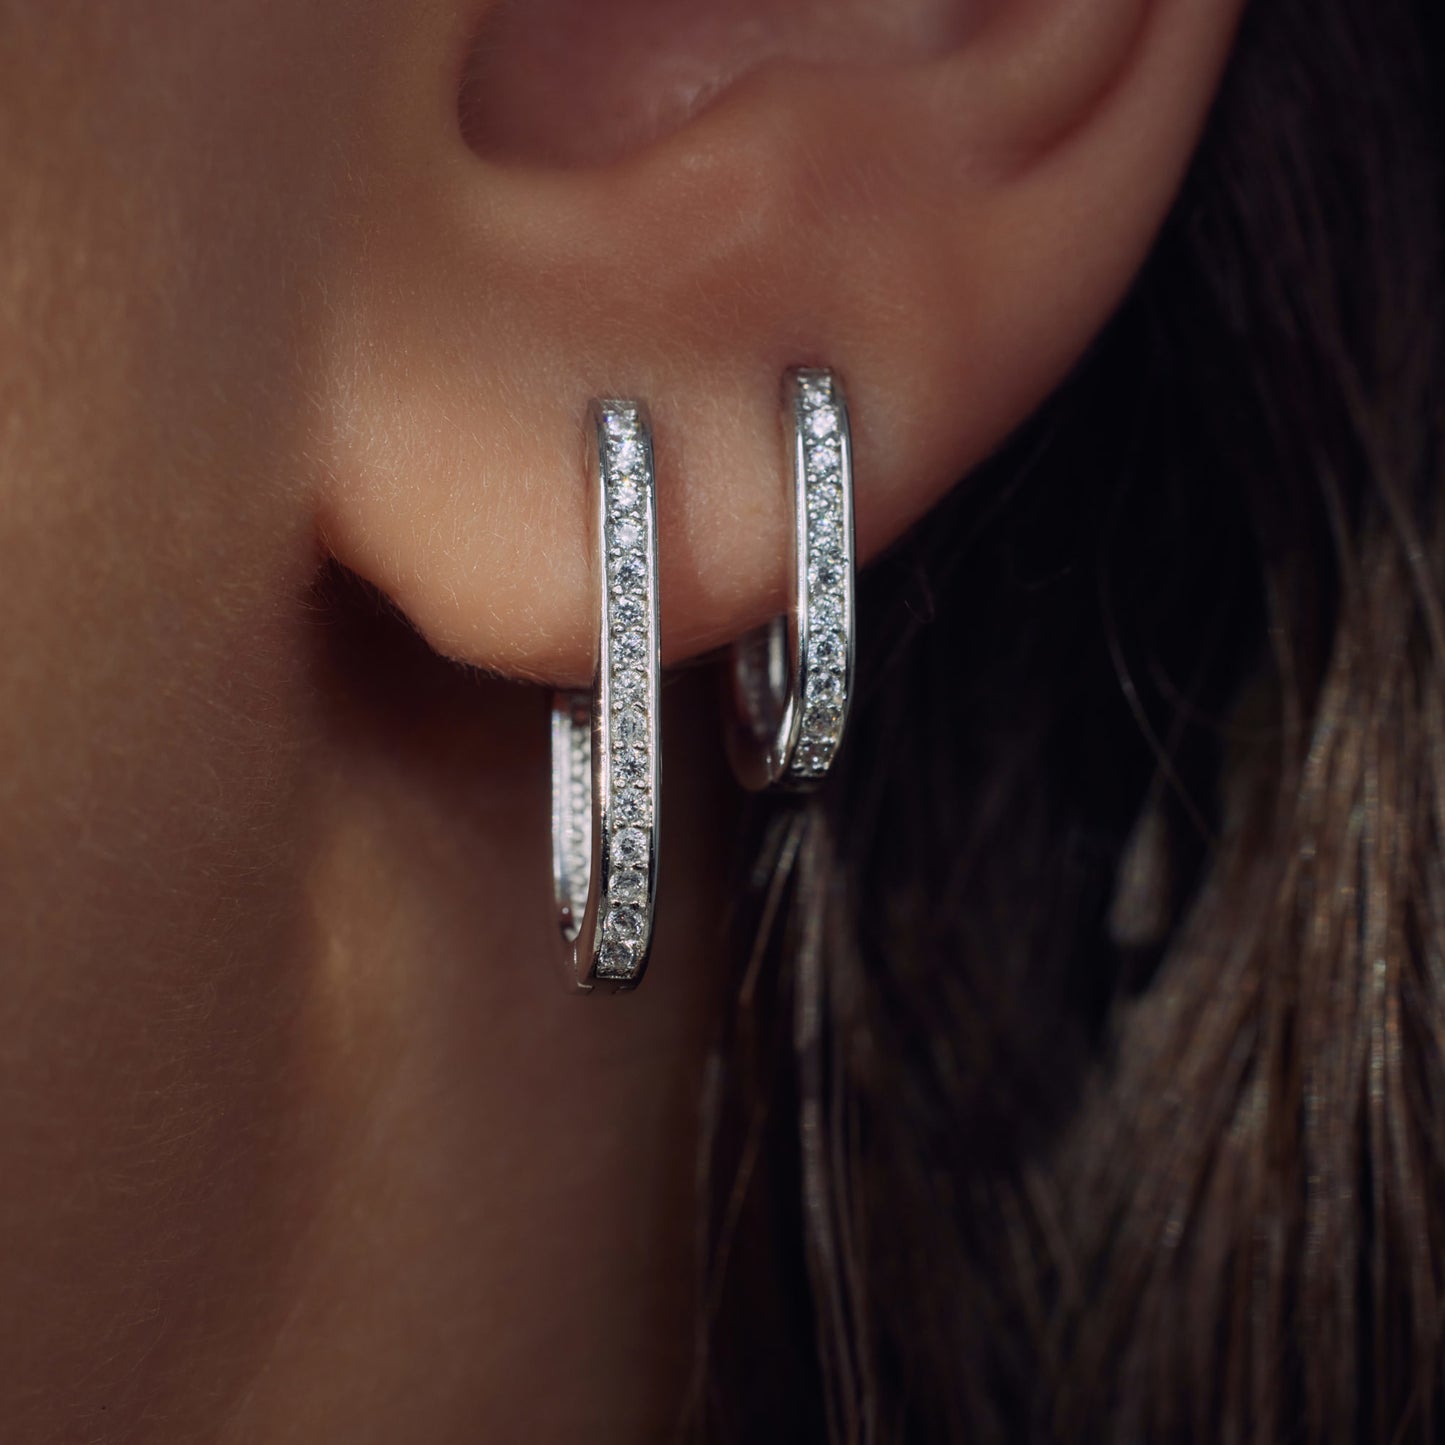 Ponte Vecchio Elina 925 sterling silver hoop earrings with zirconia stones